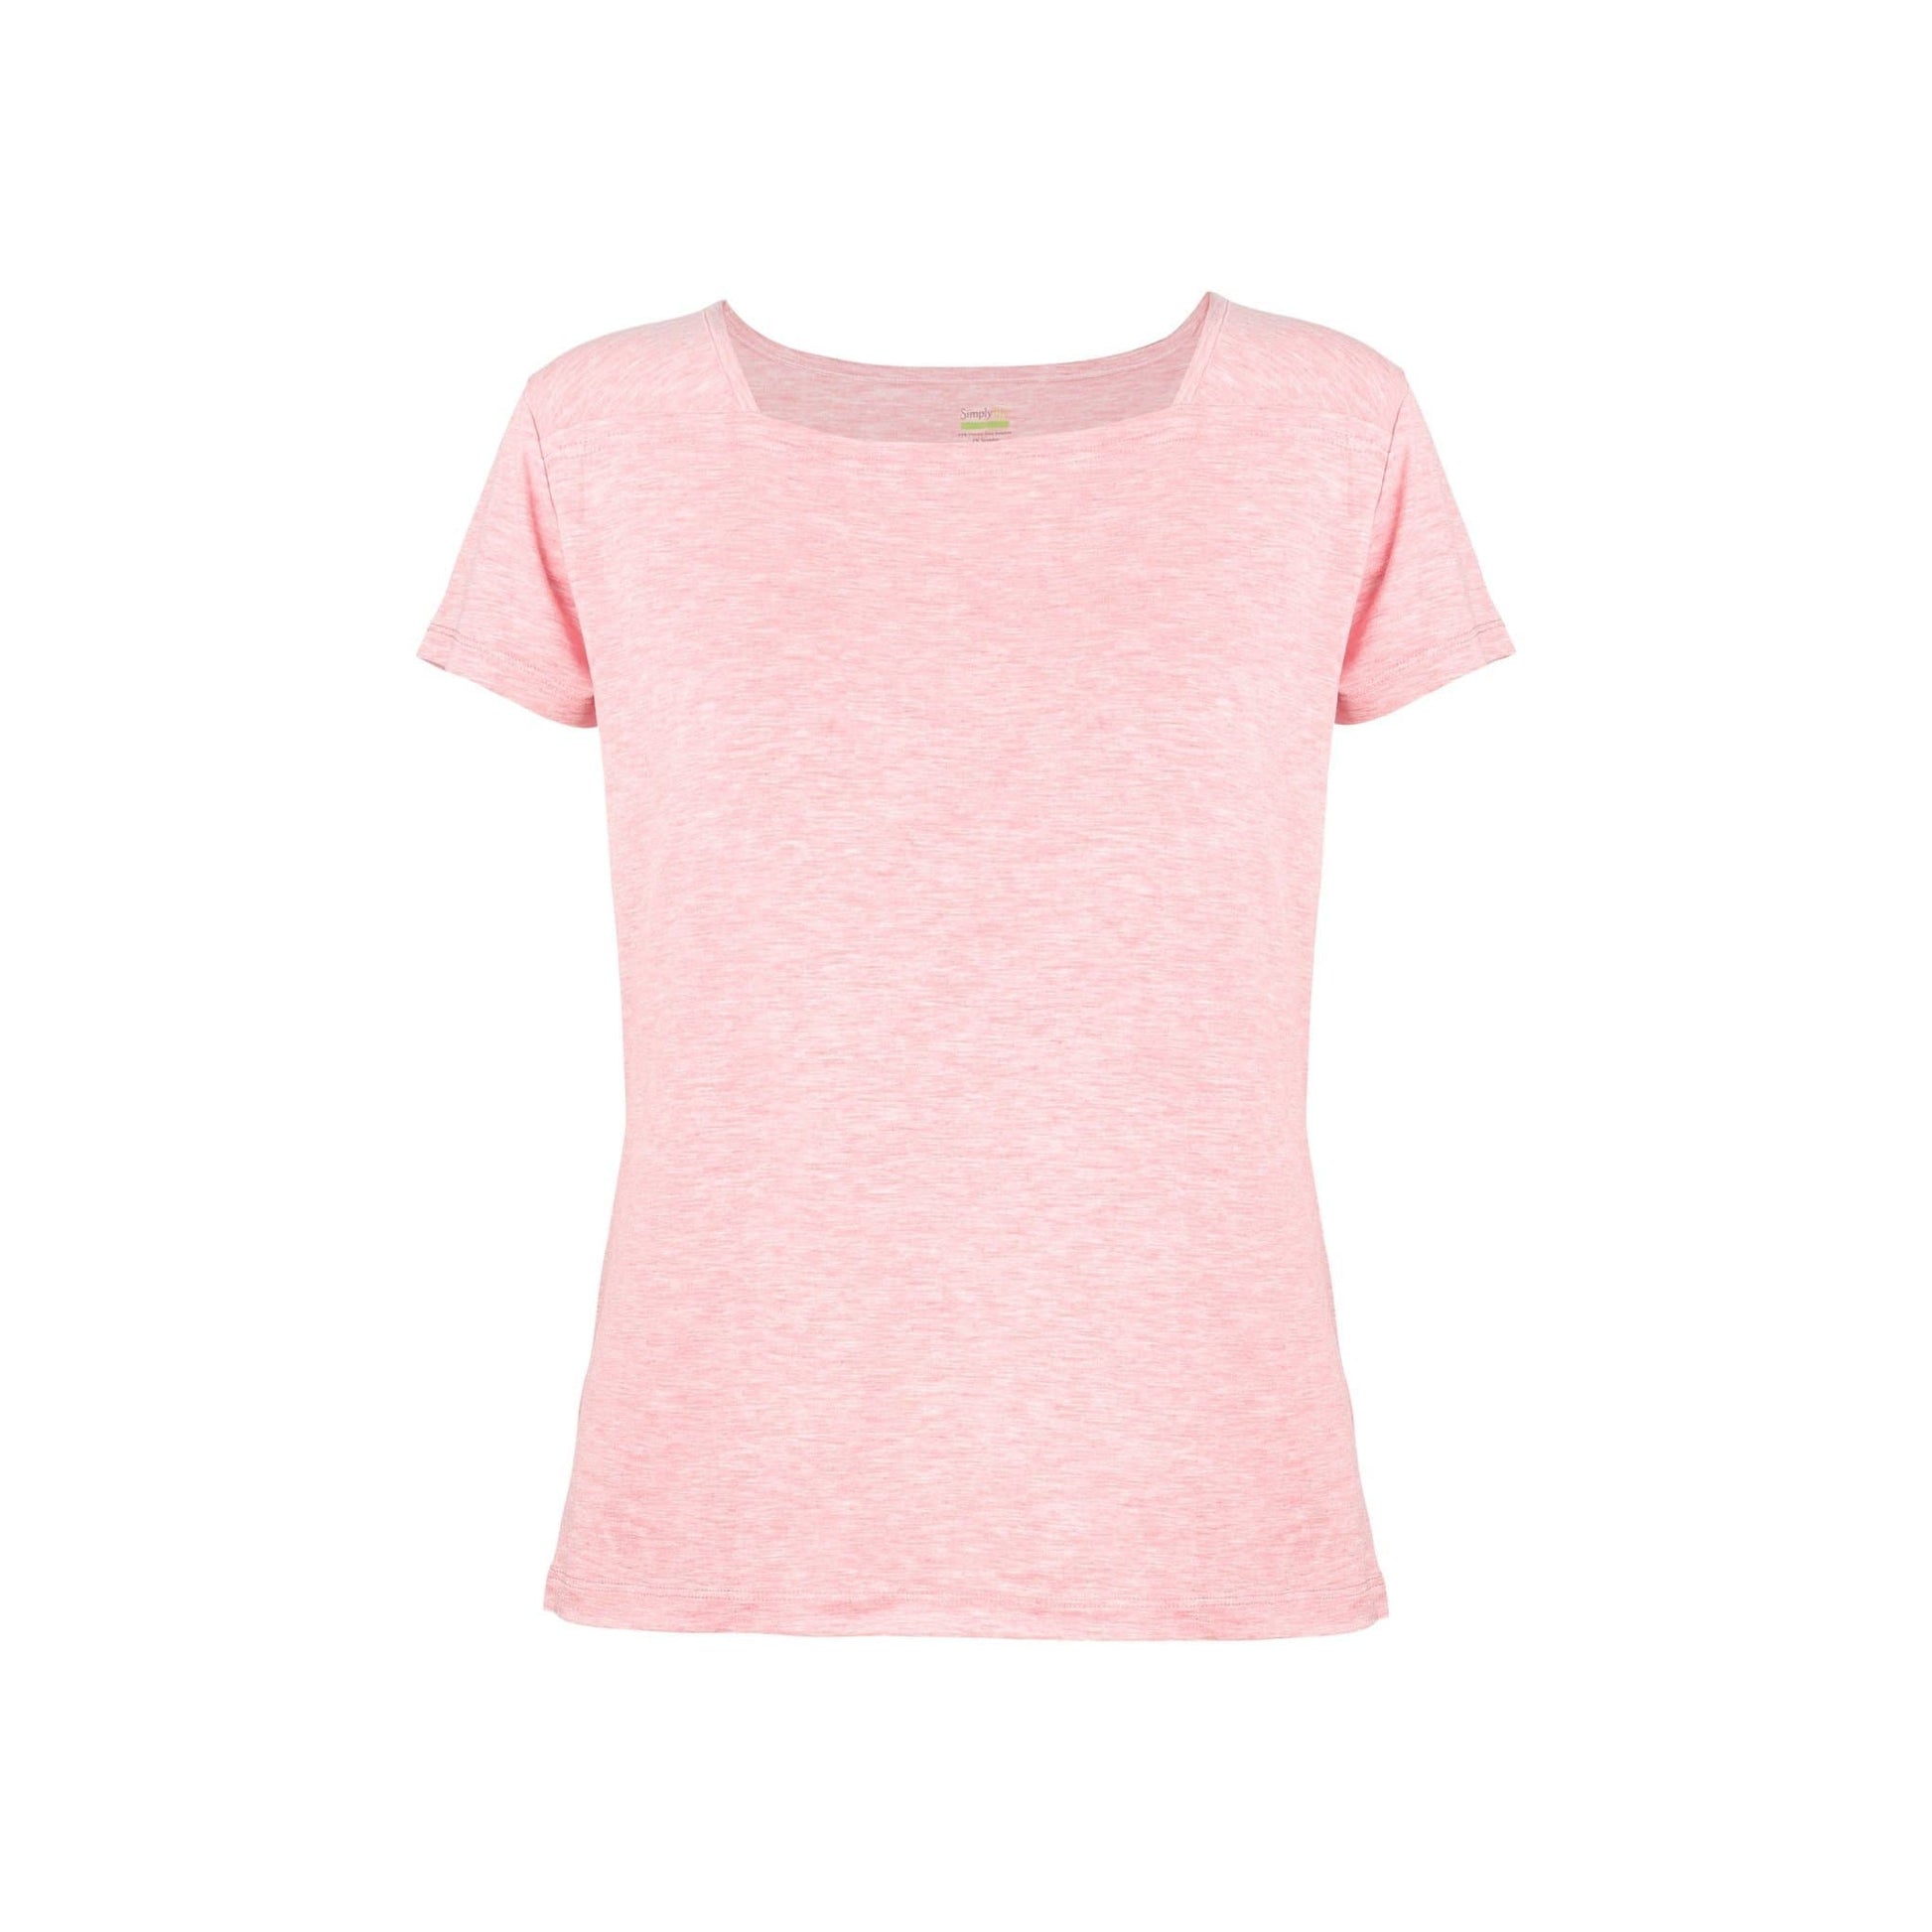 Ladies' Square Neckline, Sandwashed Pink by simplylifebaby